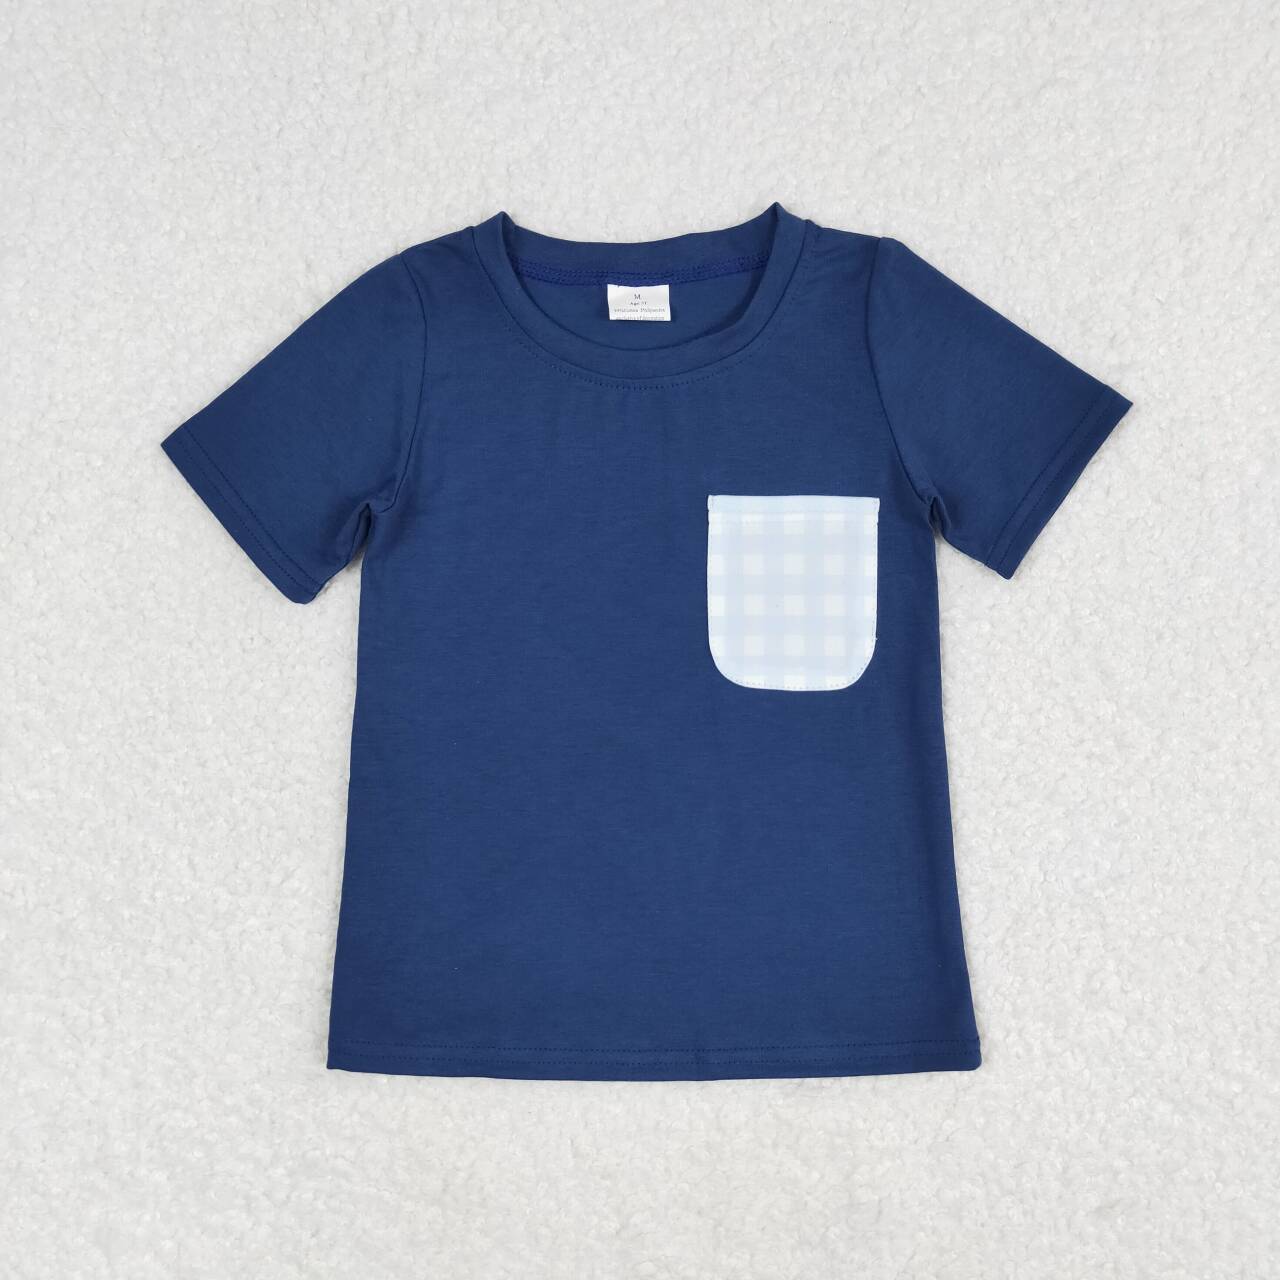 BT0705 Blue Plaid Pocket Boys Summer Tee Shirts Top